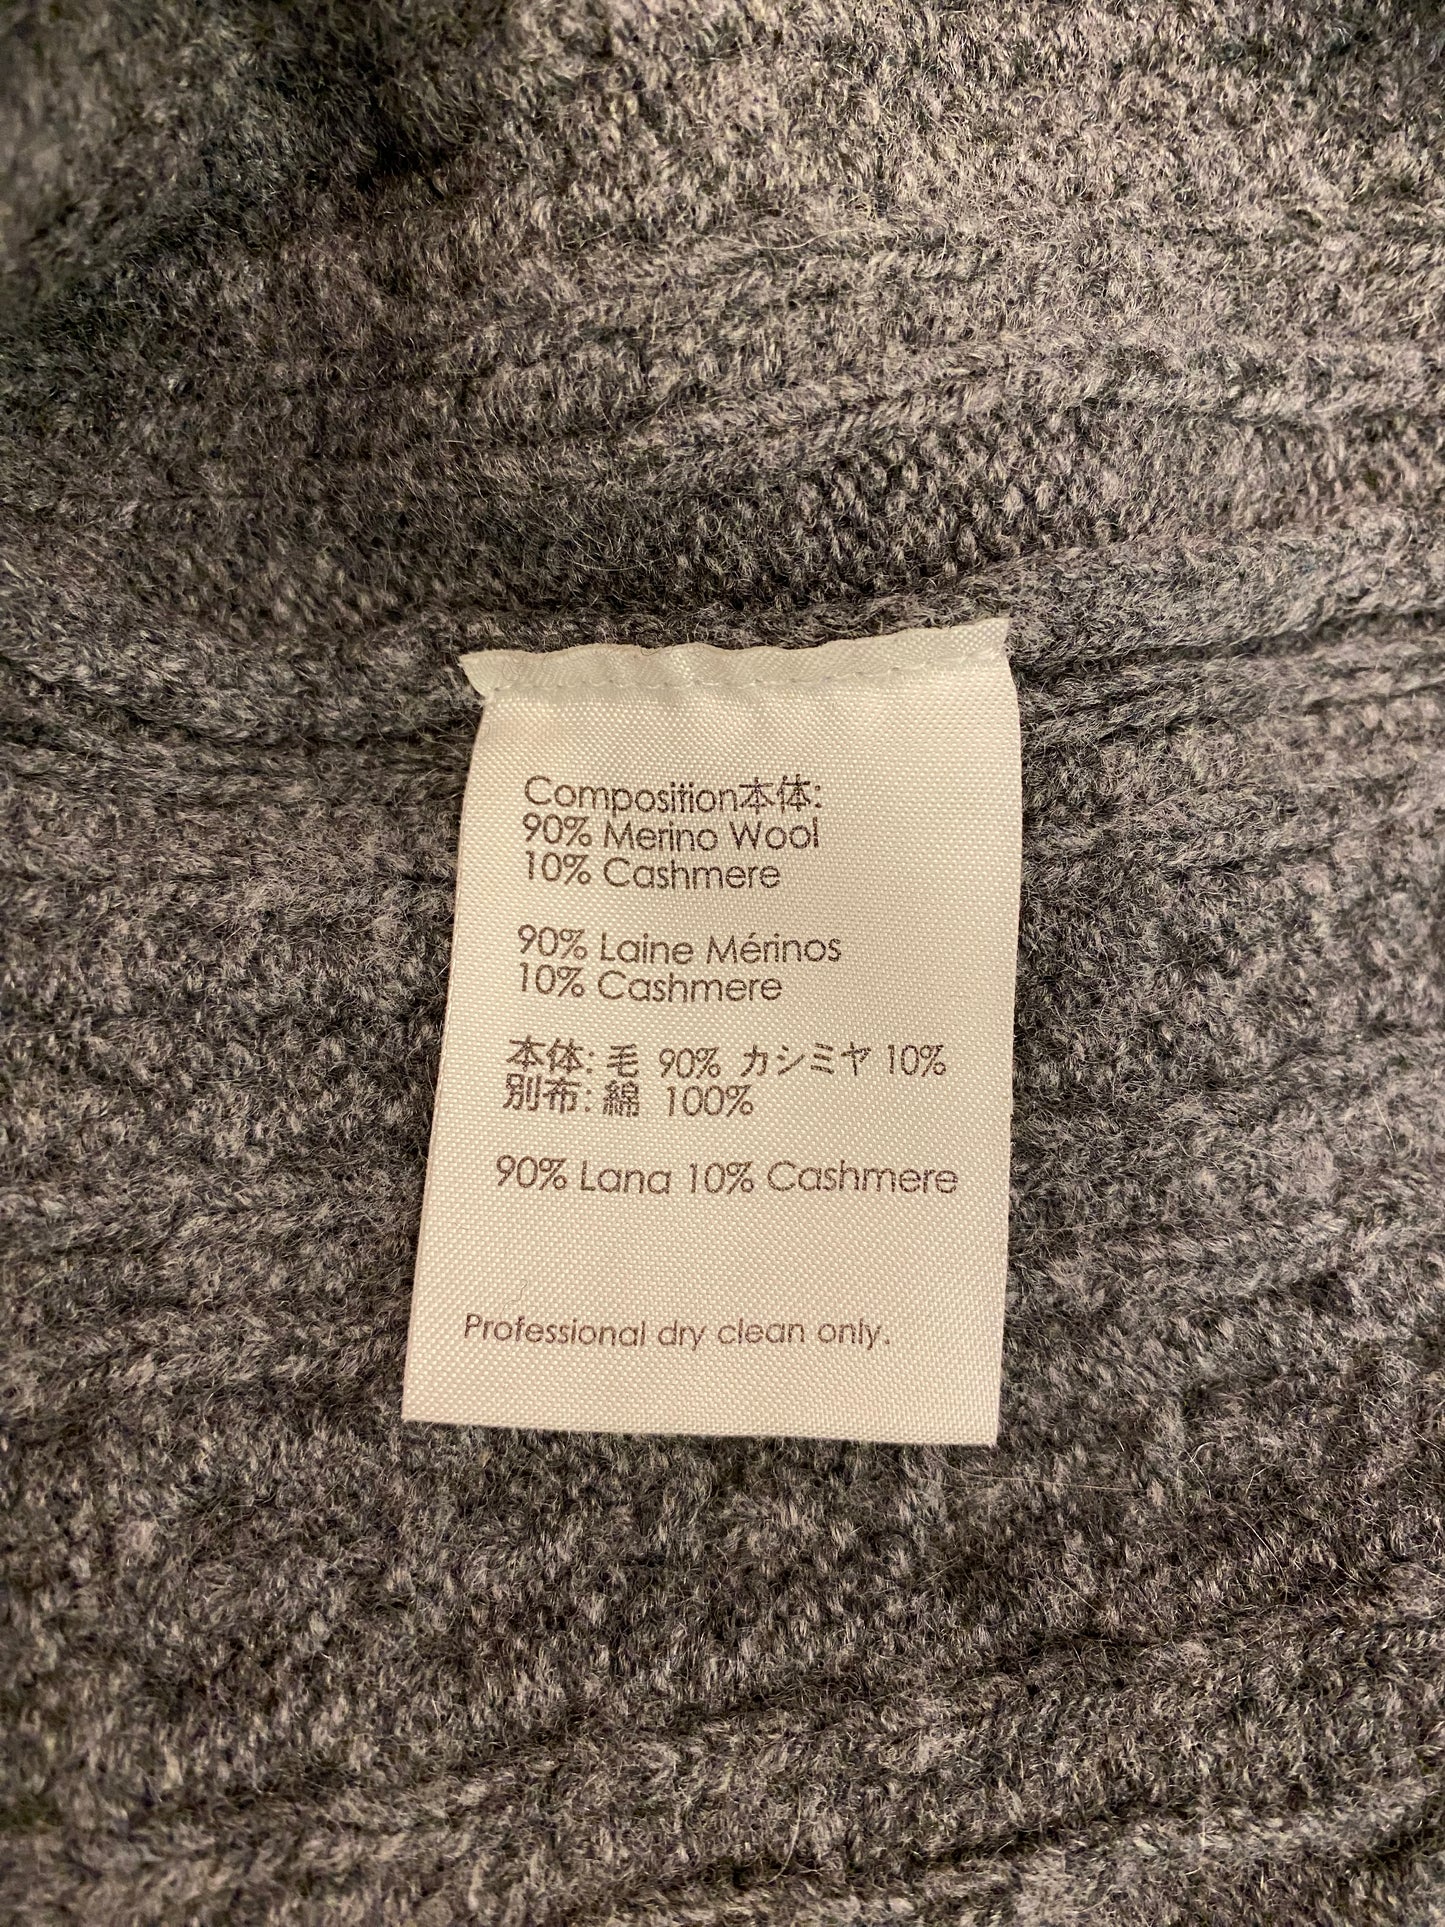 PHILLIP LIM Wool Sweater Size M